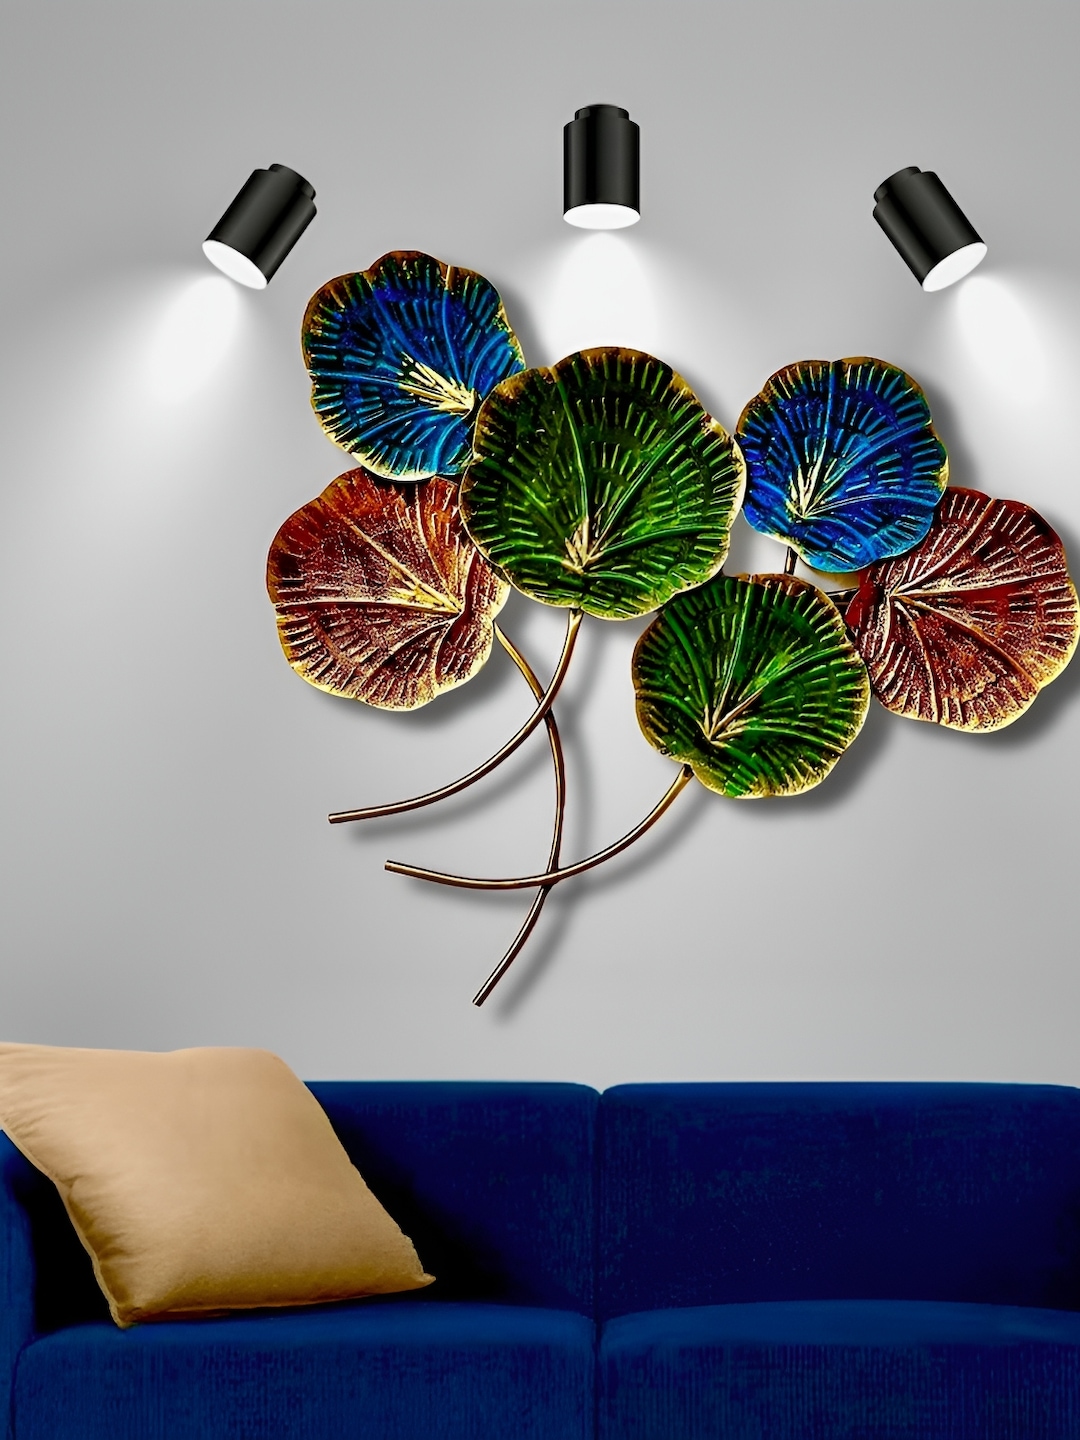 

PRANJALS HOUSE Green & Blue Lotus Petal Leaves Metal Hangings Wall Decor